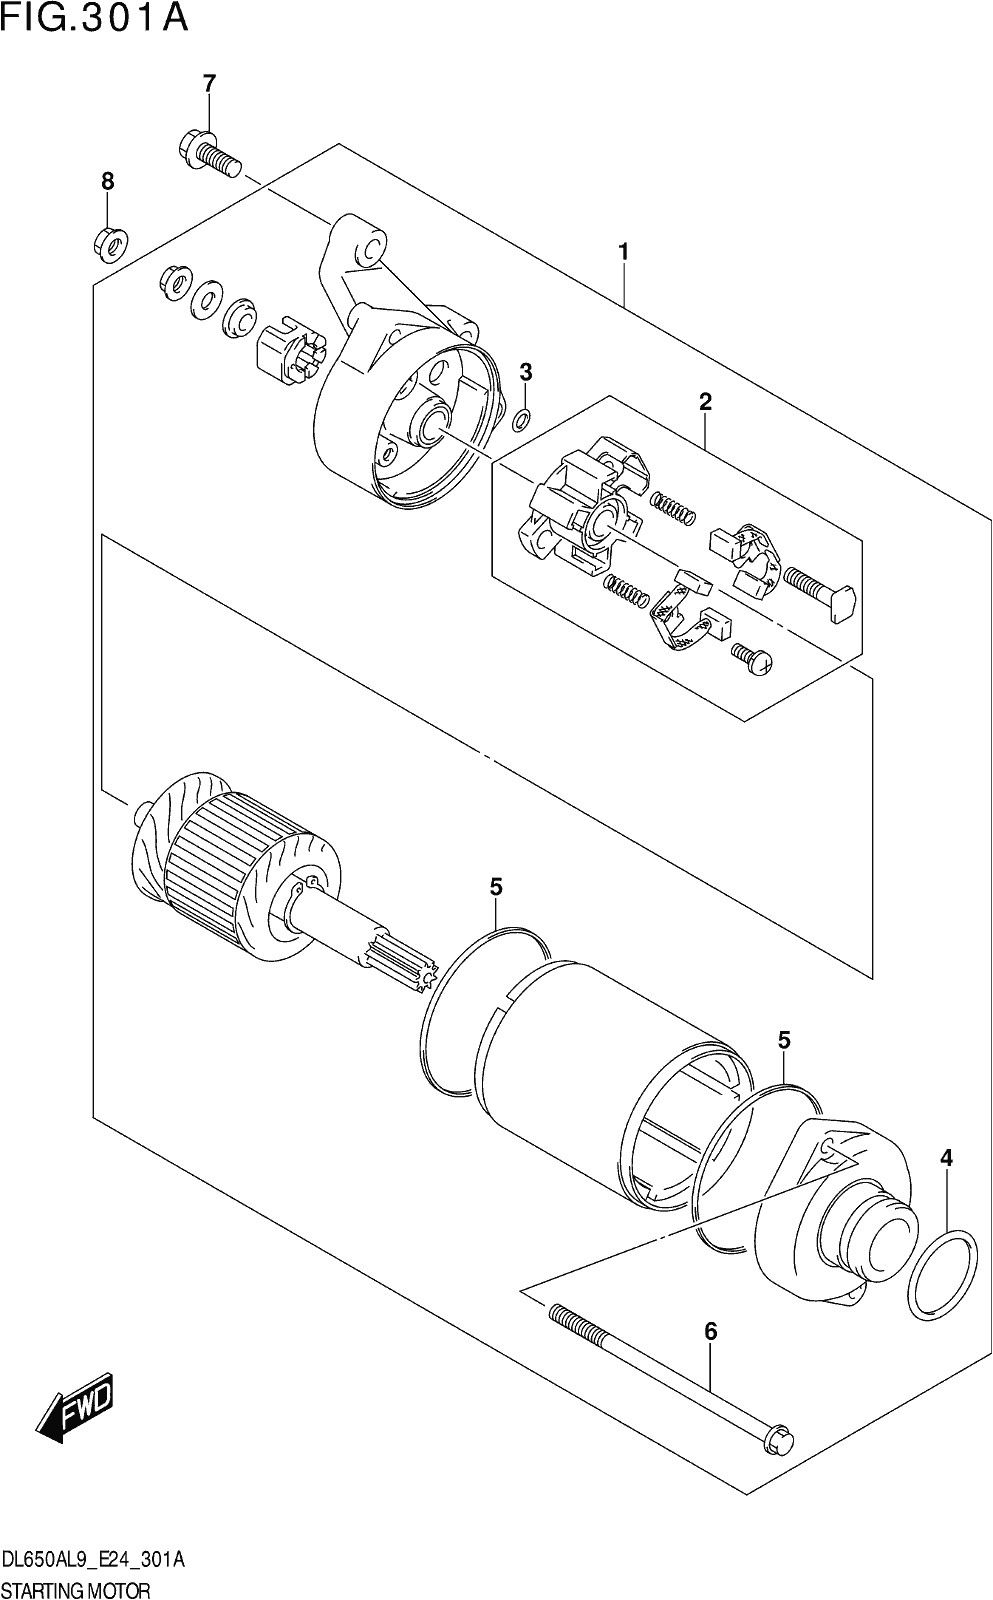 Fig.301a Starting Motor